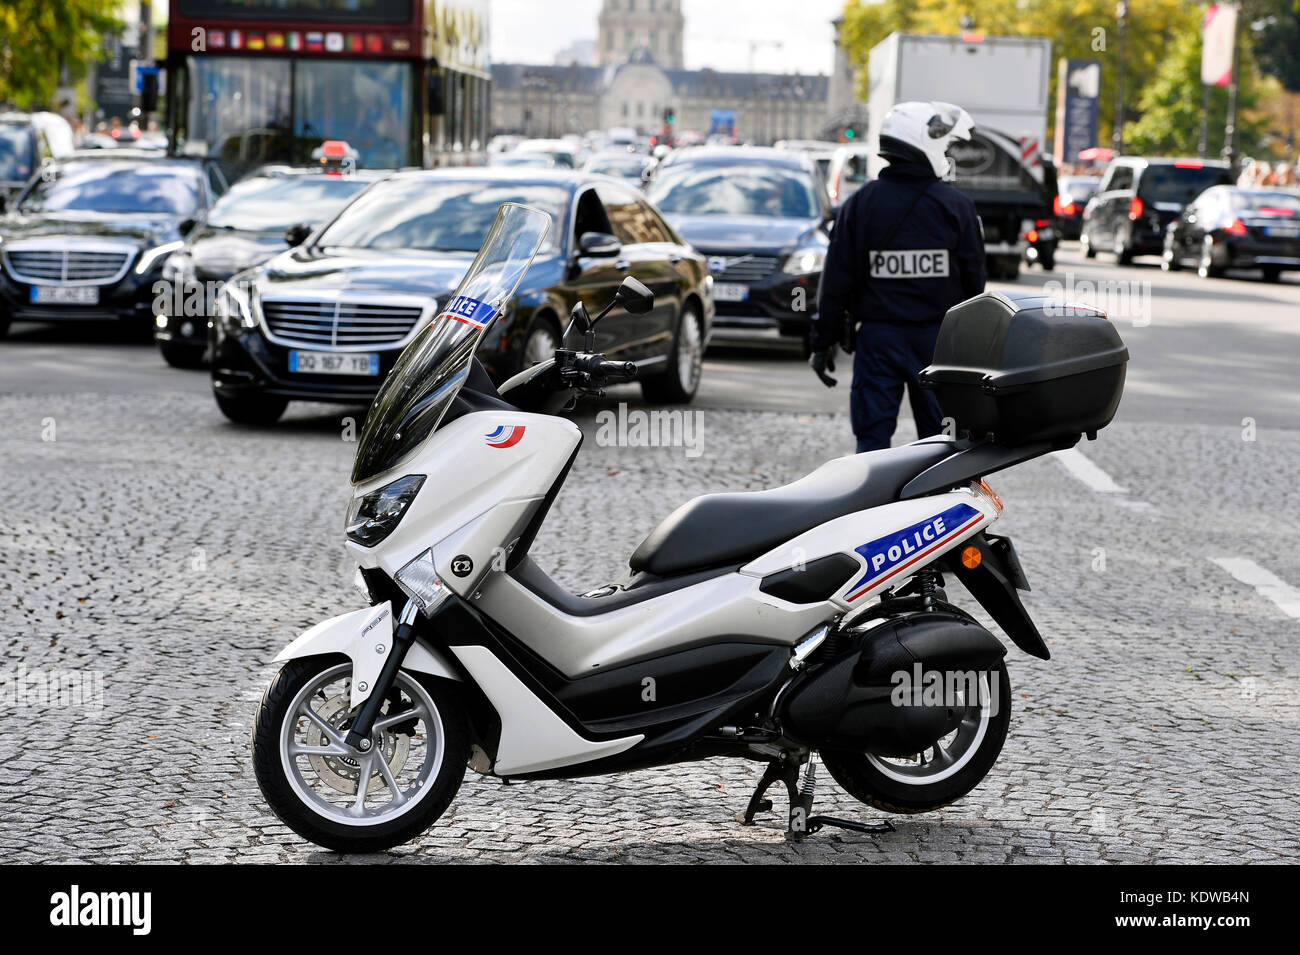 Police officer regulating traffic, Paris - France Stock Photo